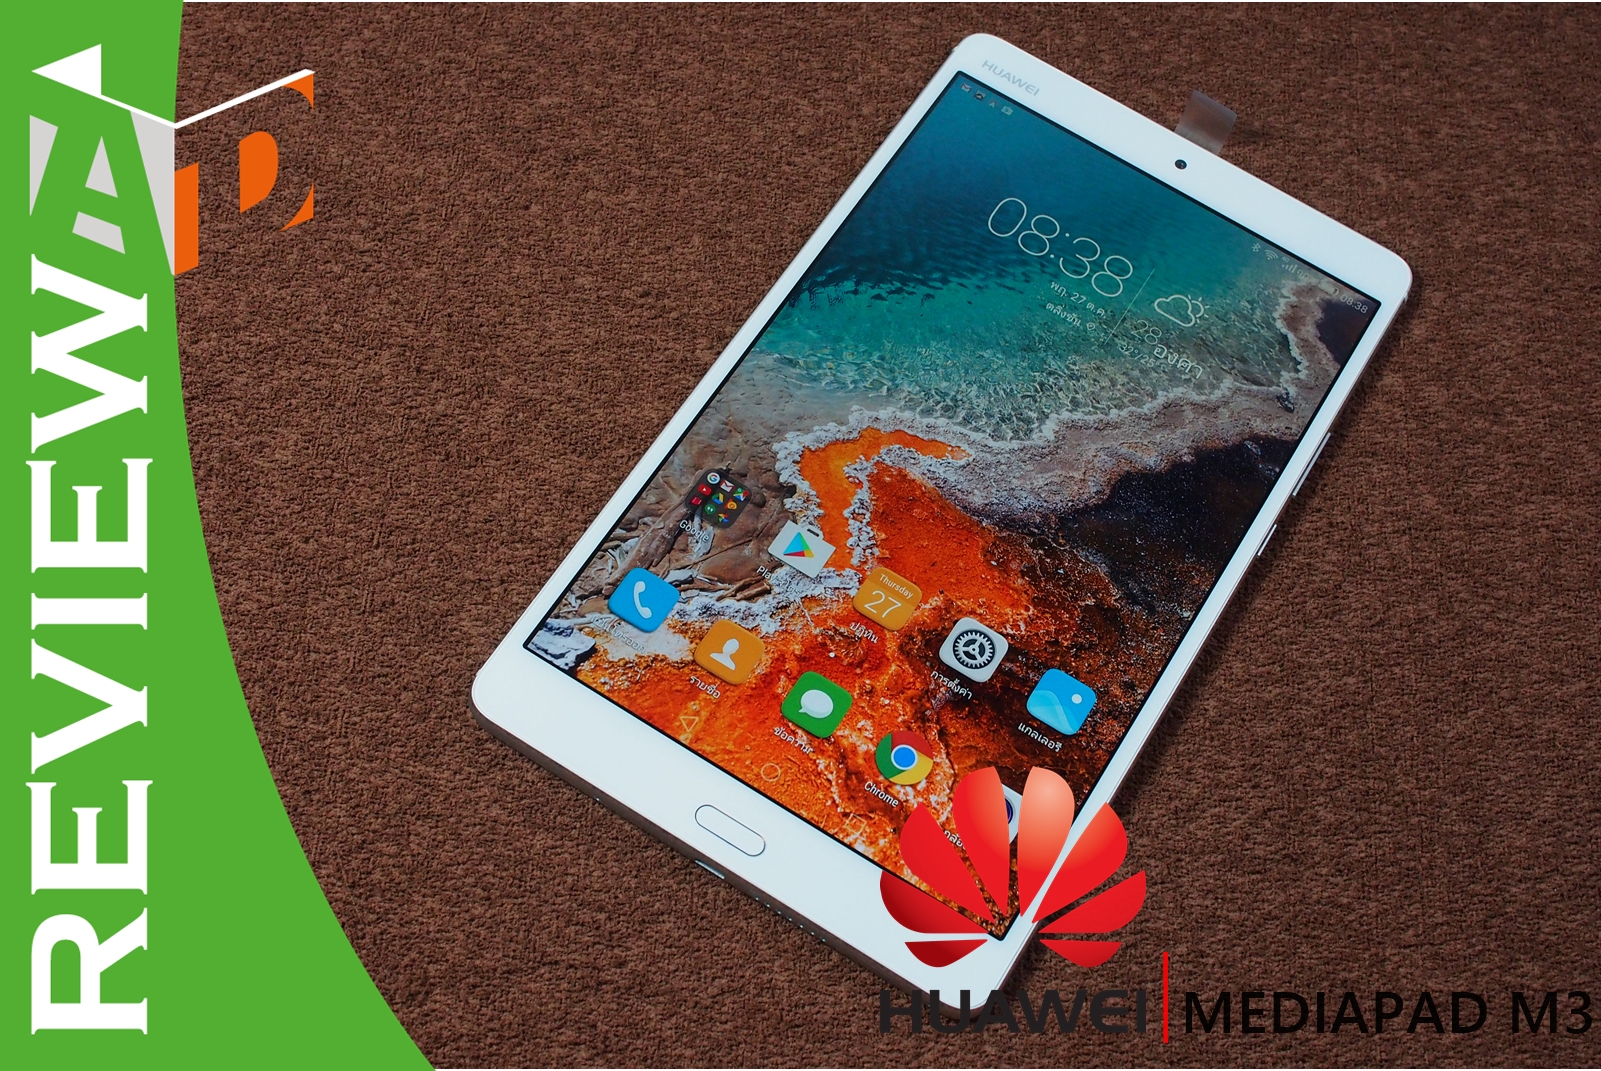 PA273027 | Tablet | รีวิว Huawei MediaPad M3 แท็บเล็ตคุณภาพสูง จอใสเสียงสวย มาตรฐาน harman/kardon